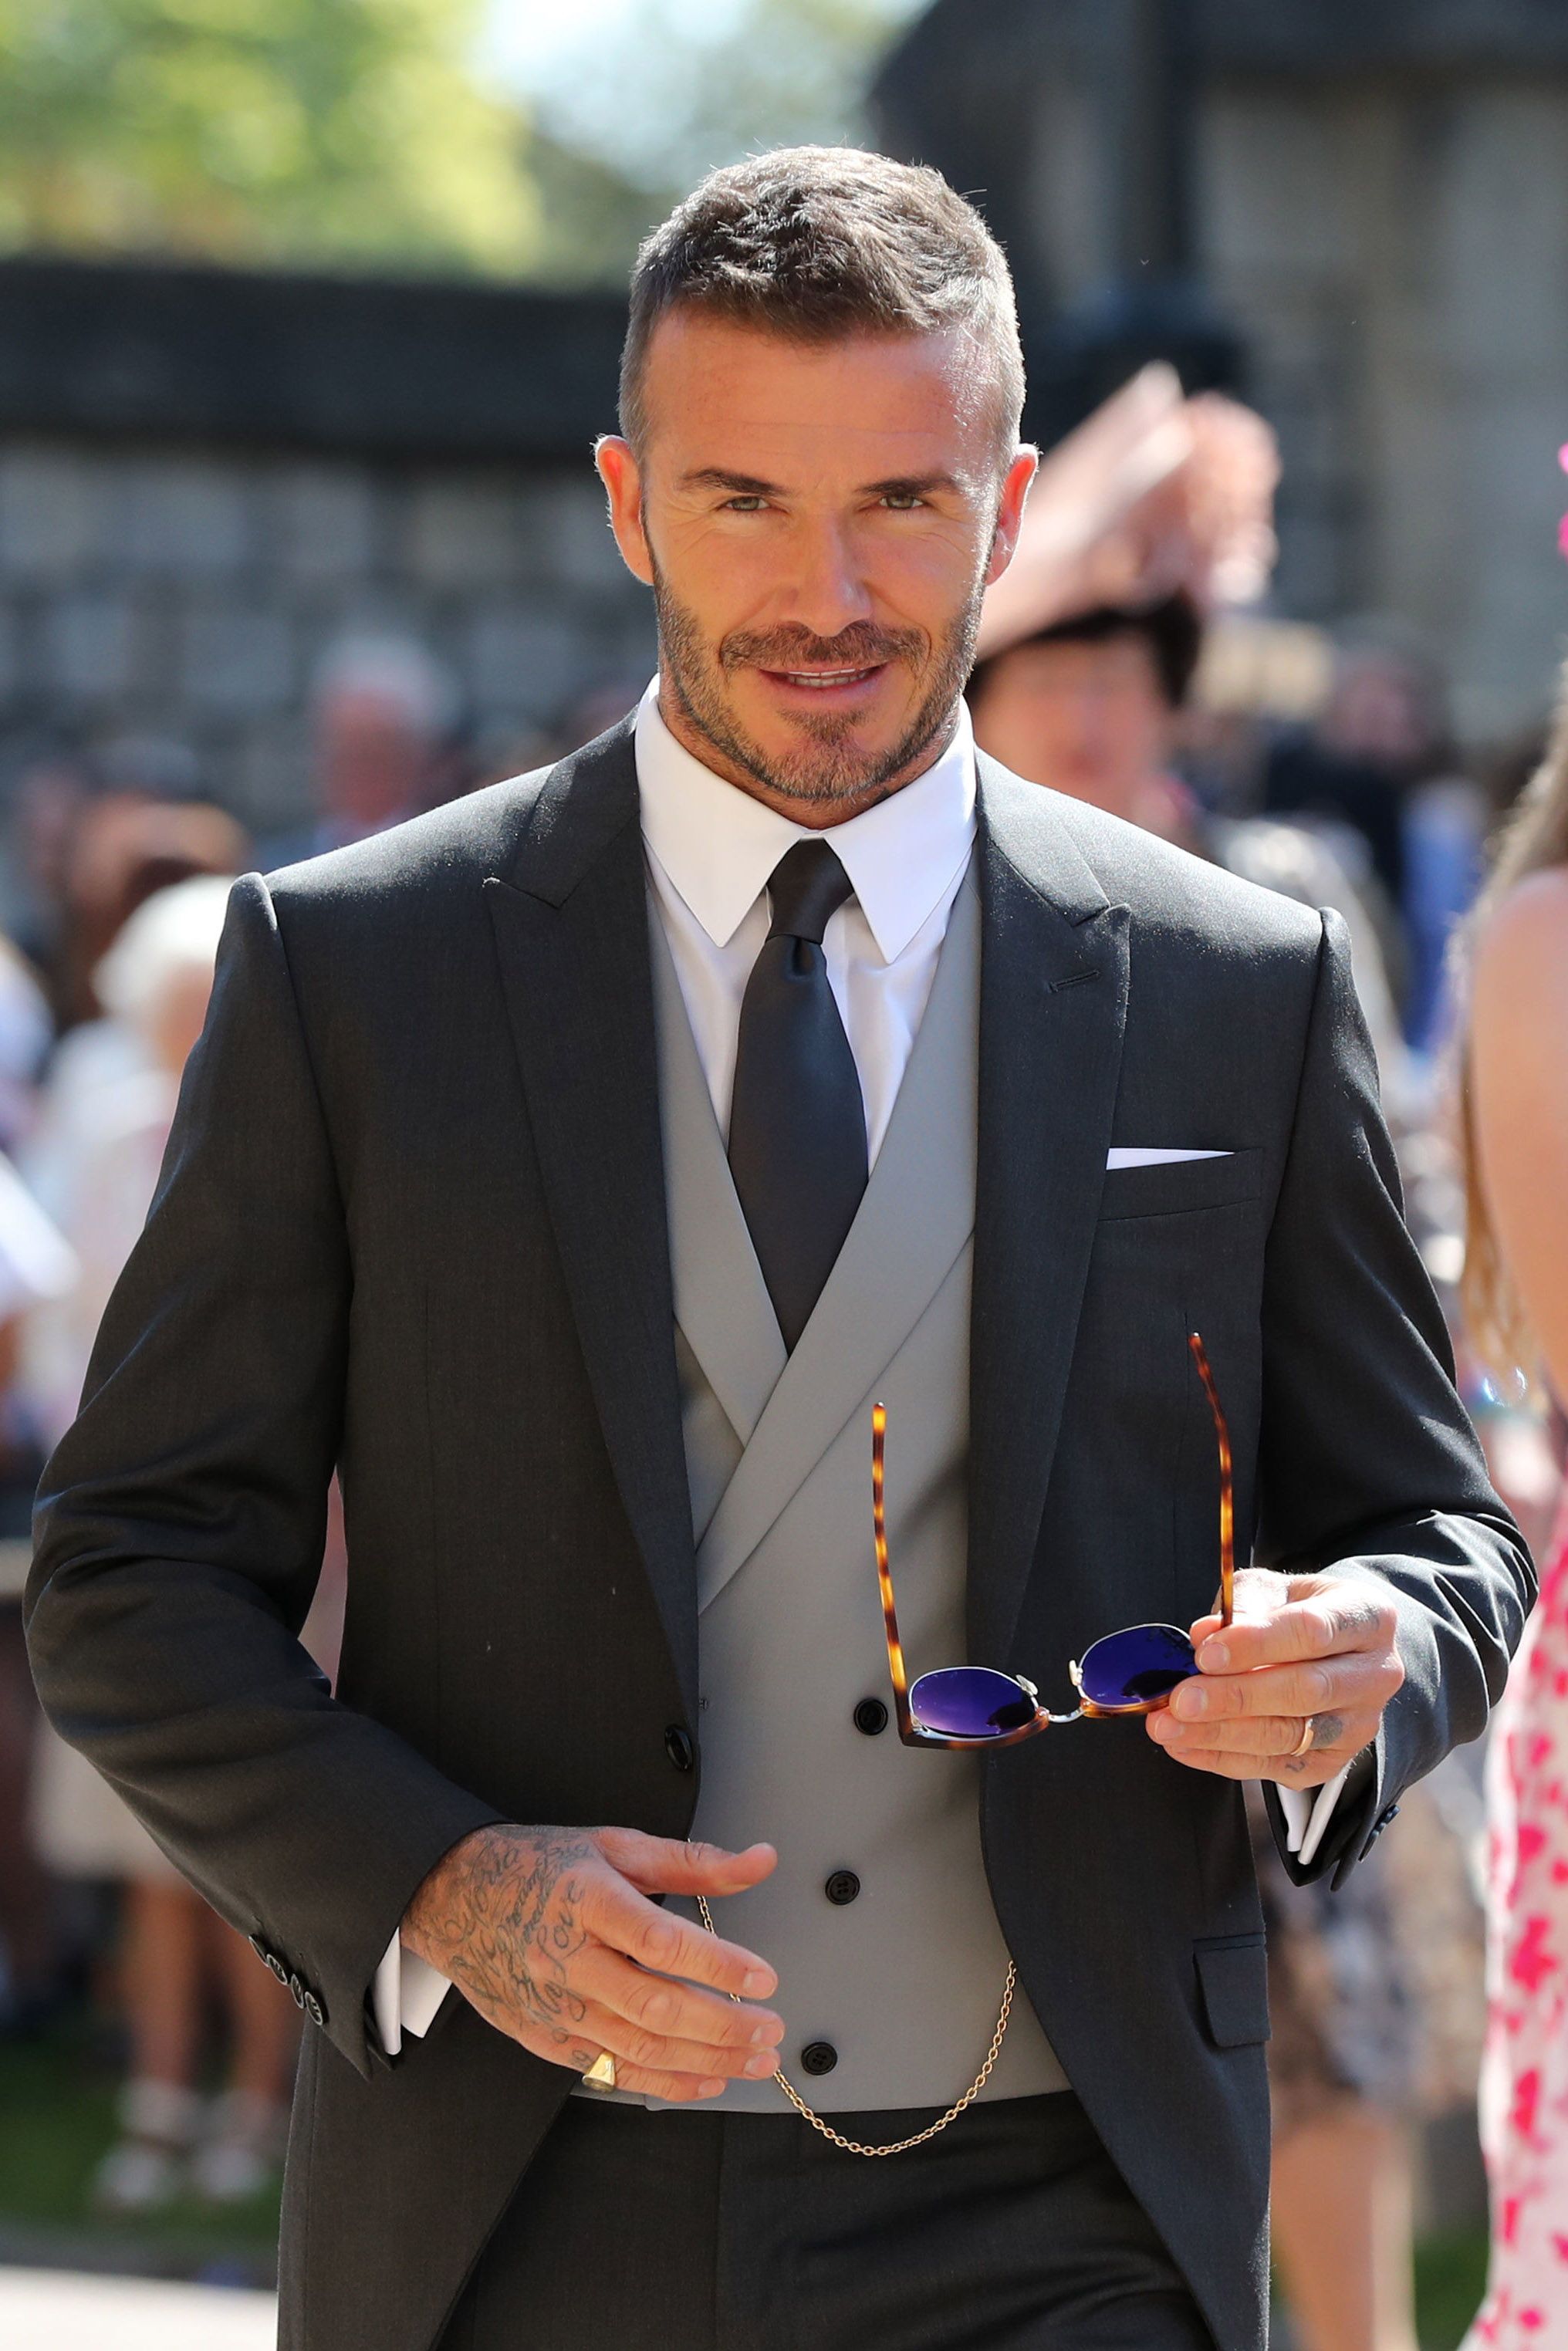 David Beckham's net worth: What has the footballer earned?